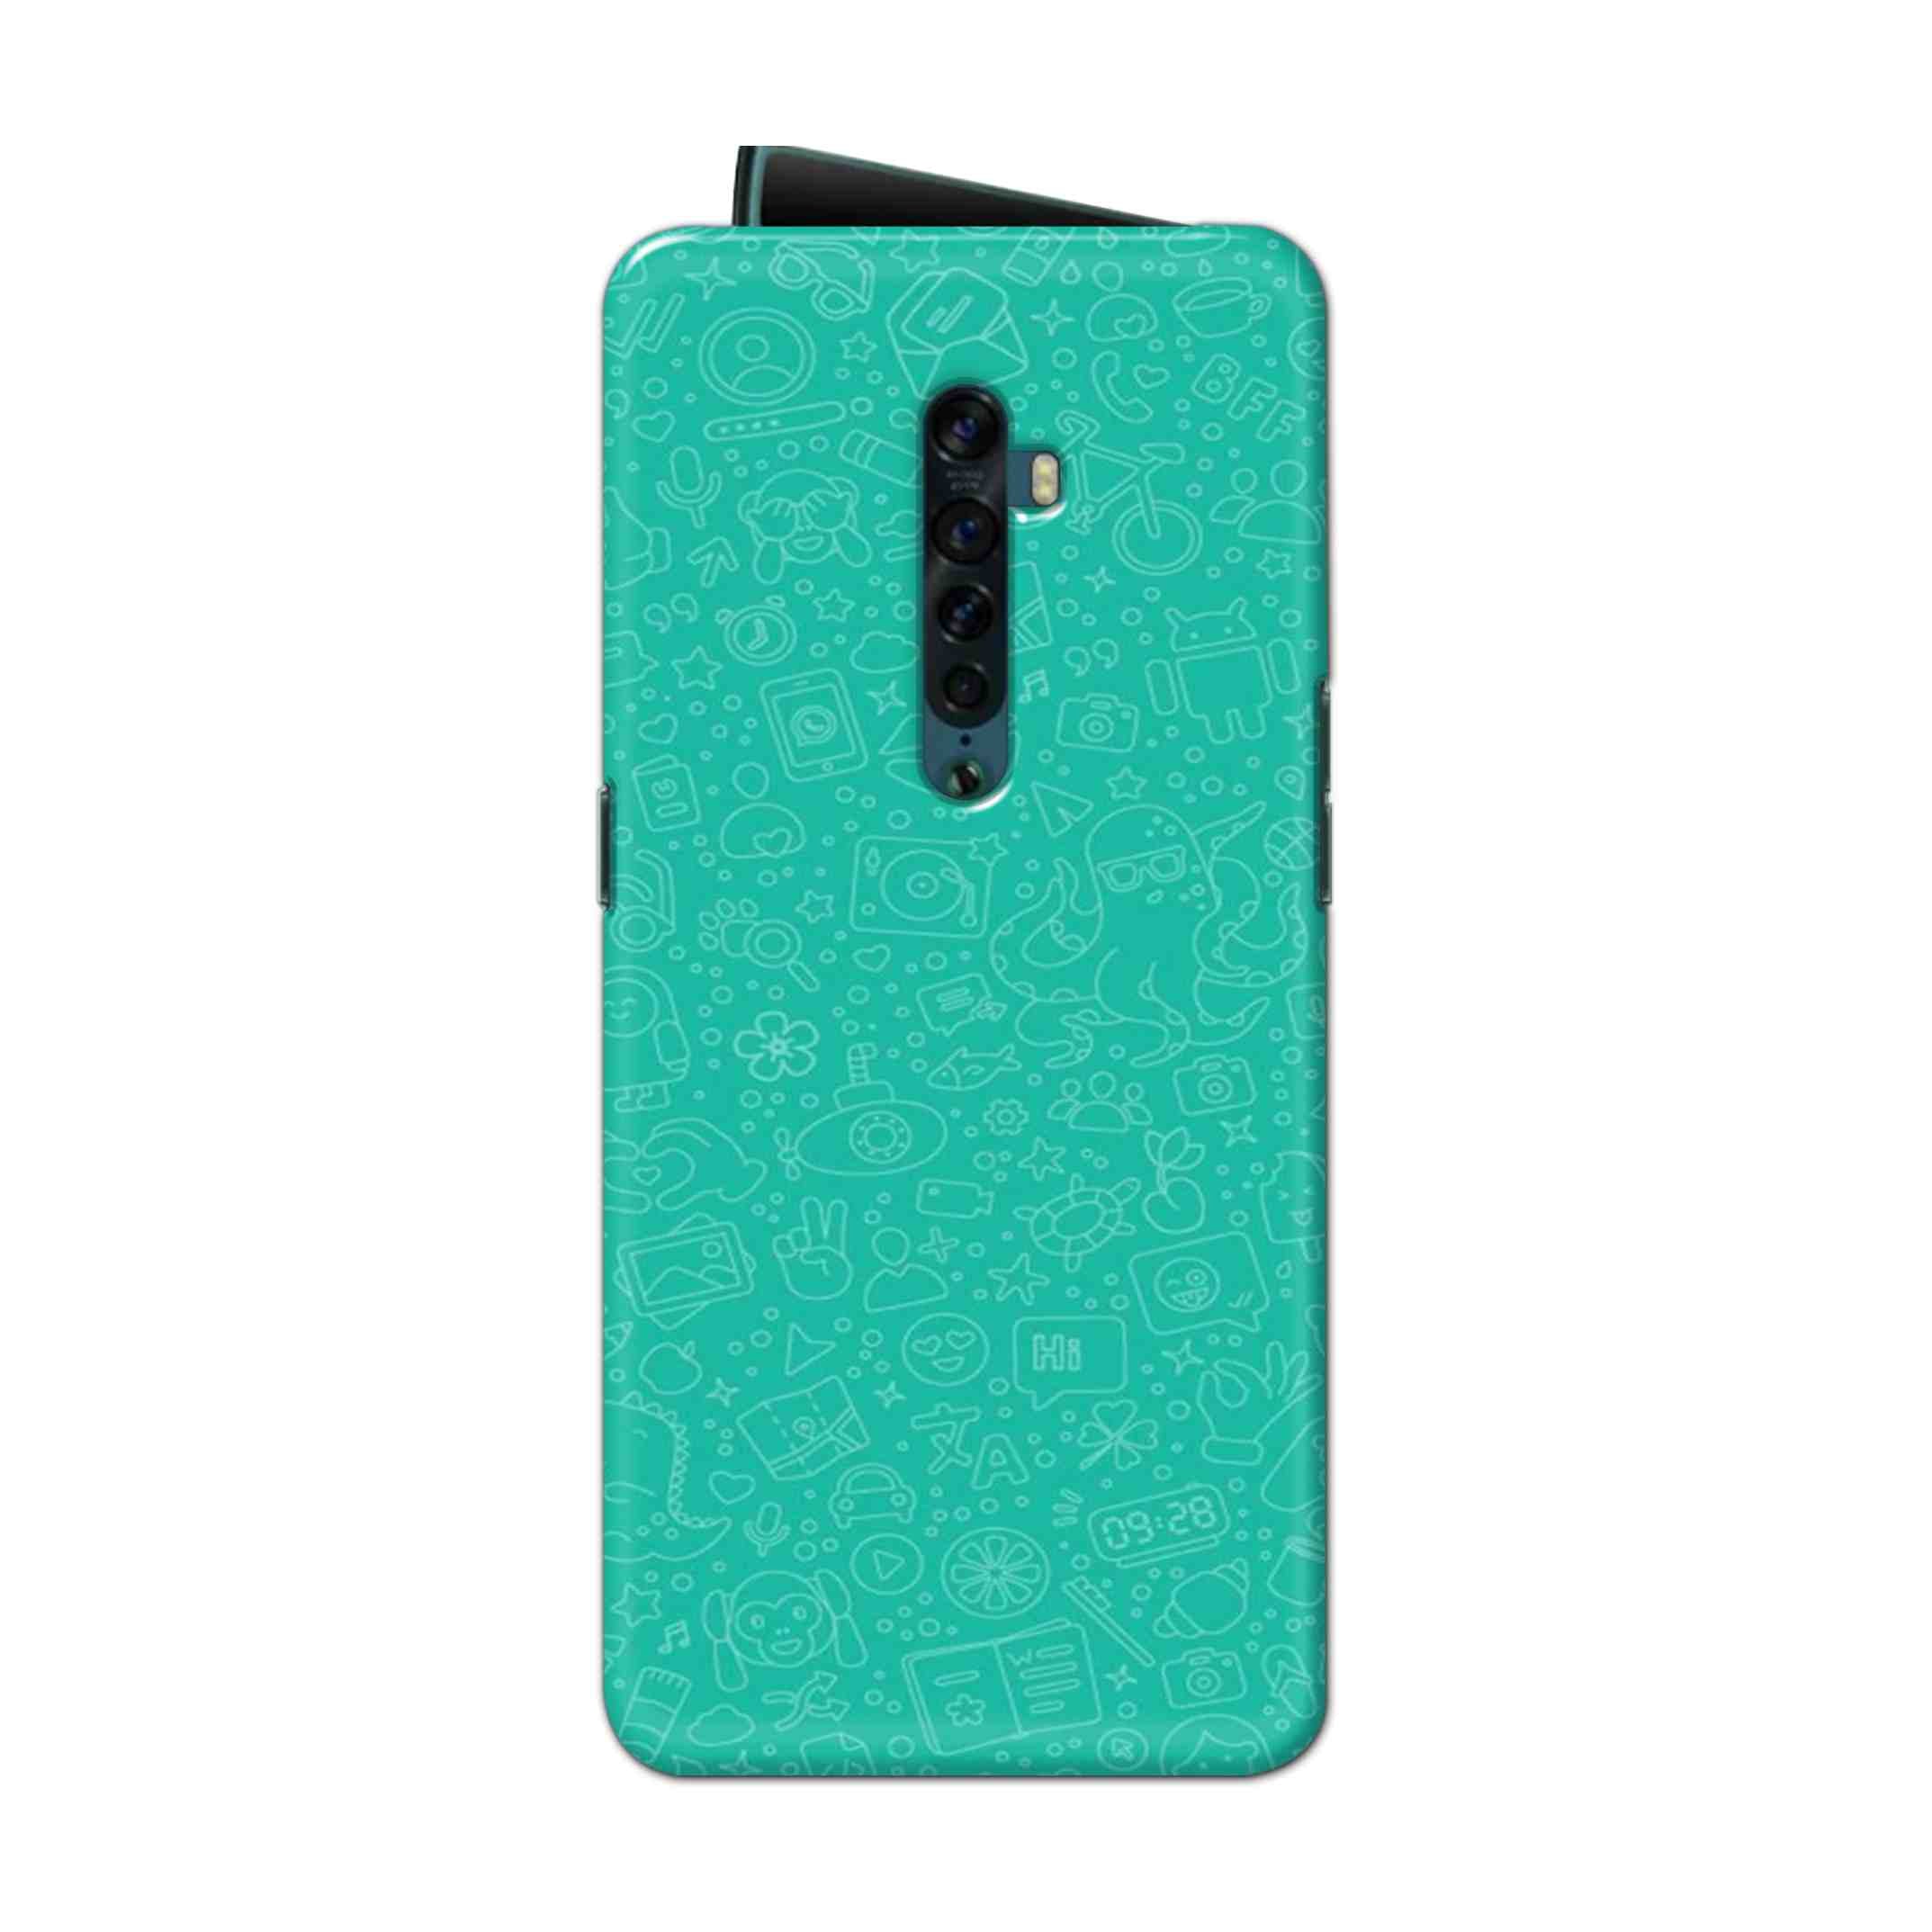 Buy Whatsapp Hard Back Mobile Phone Case Cover For Oppo Reno 2 Online